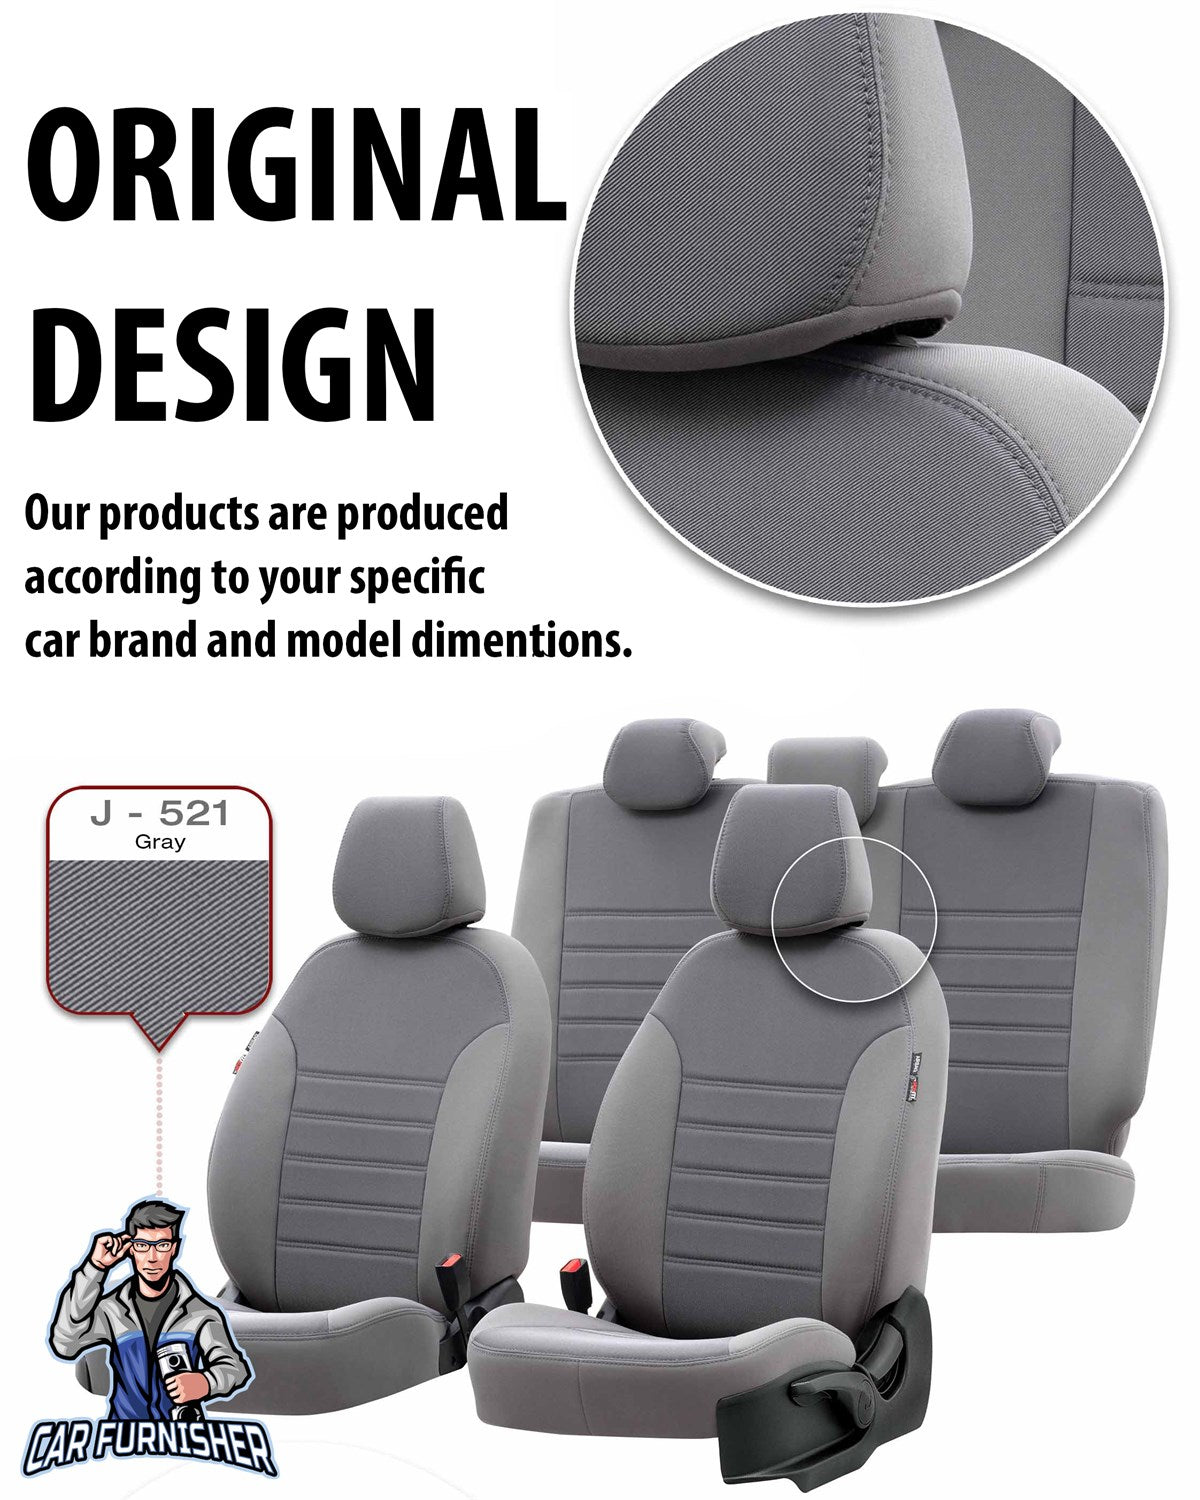 Subaru Legacy Seat Cover Original Jacquard Design Smoked Jacquard Fabric